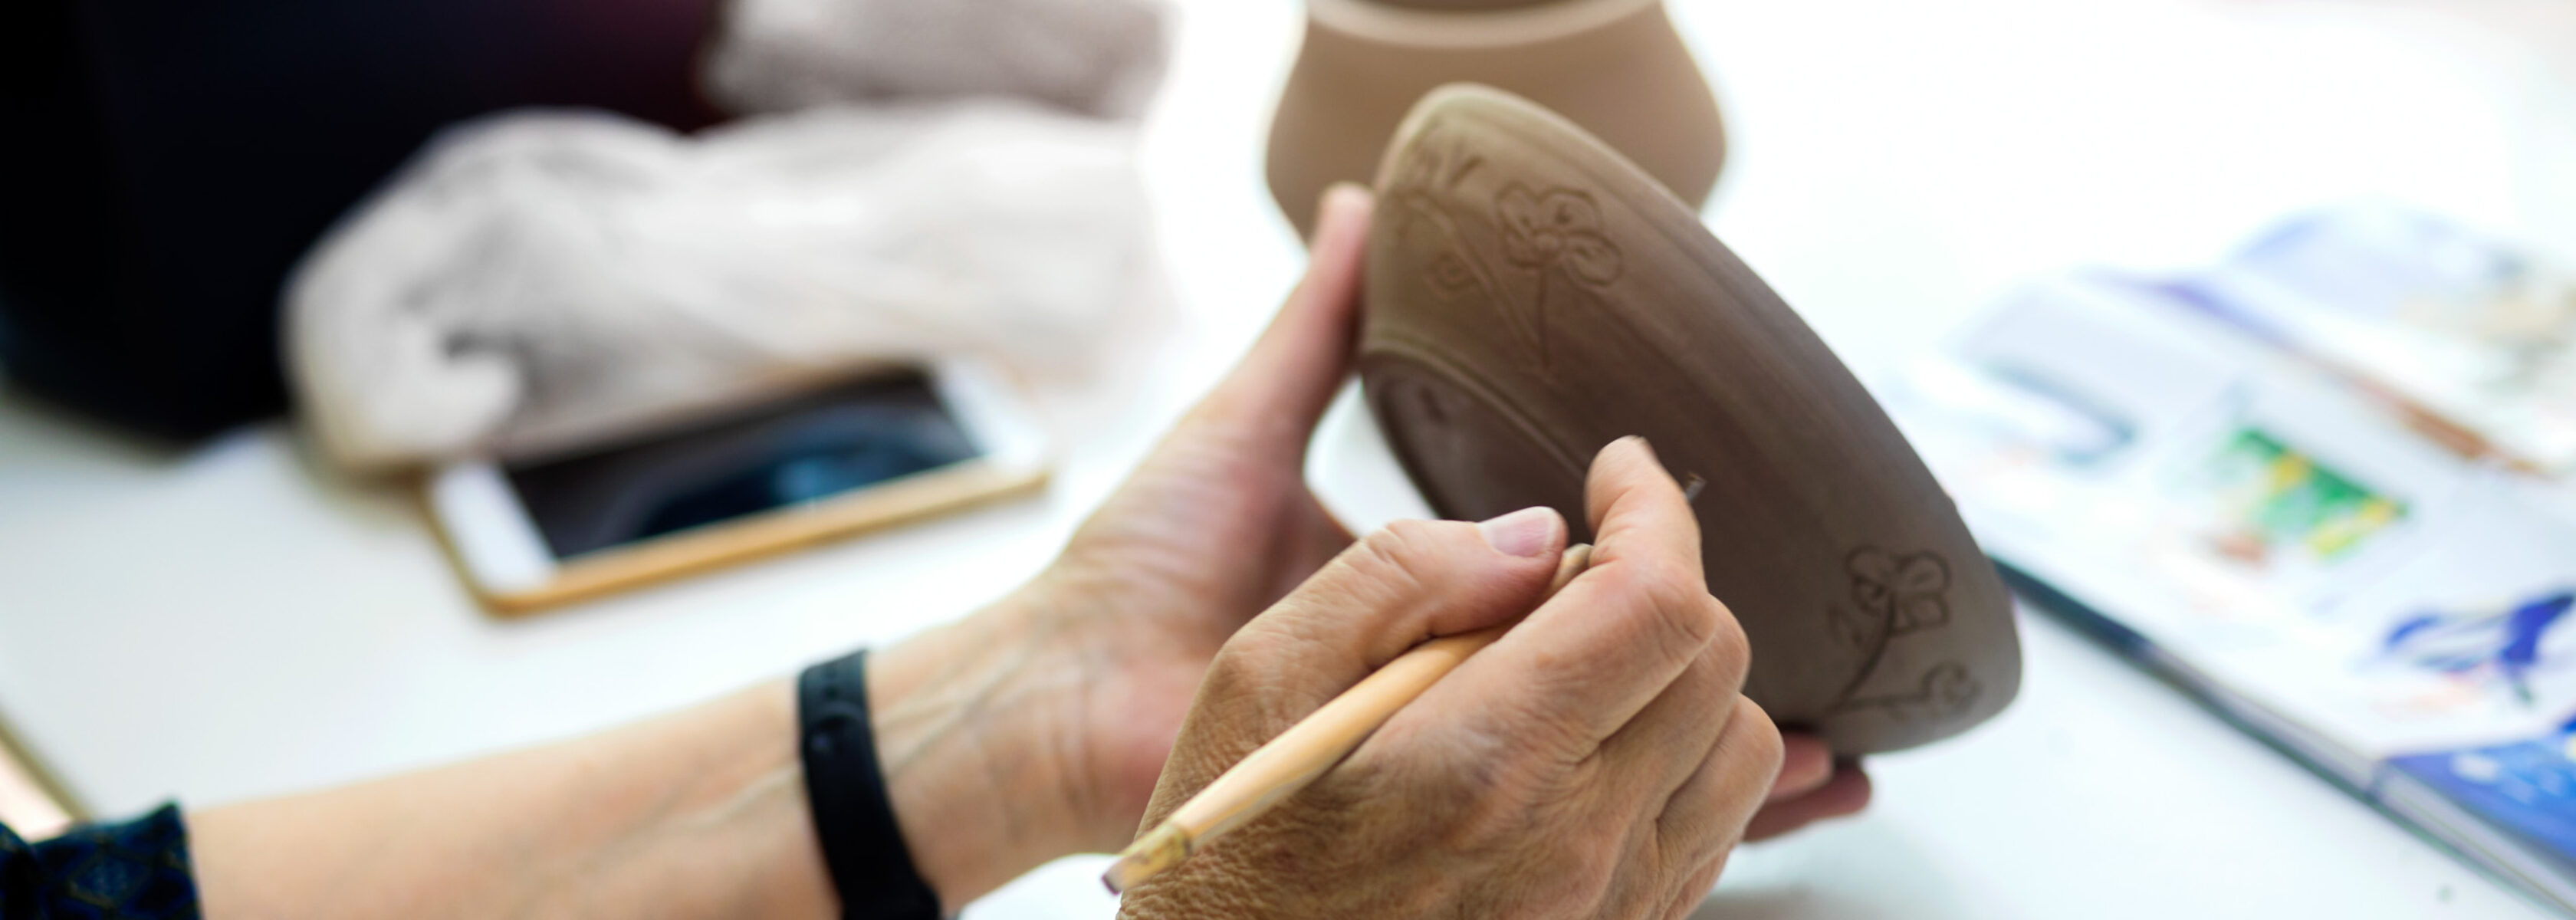 hands marking up a ceramic bowl.